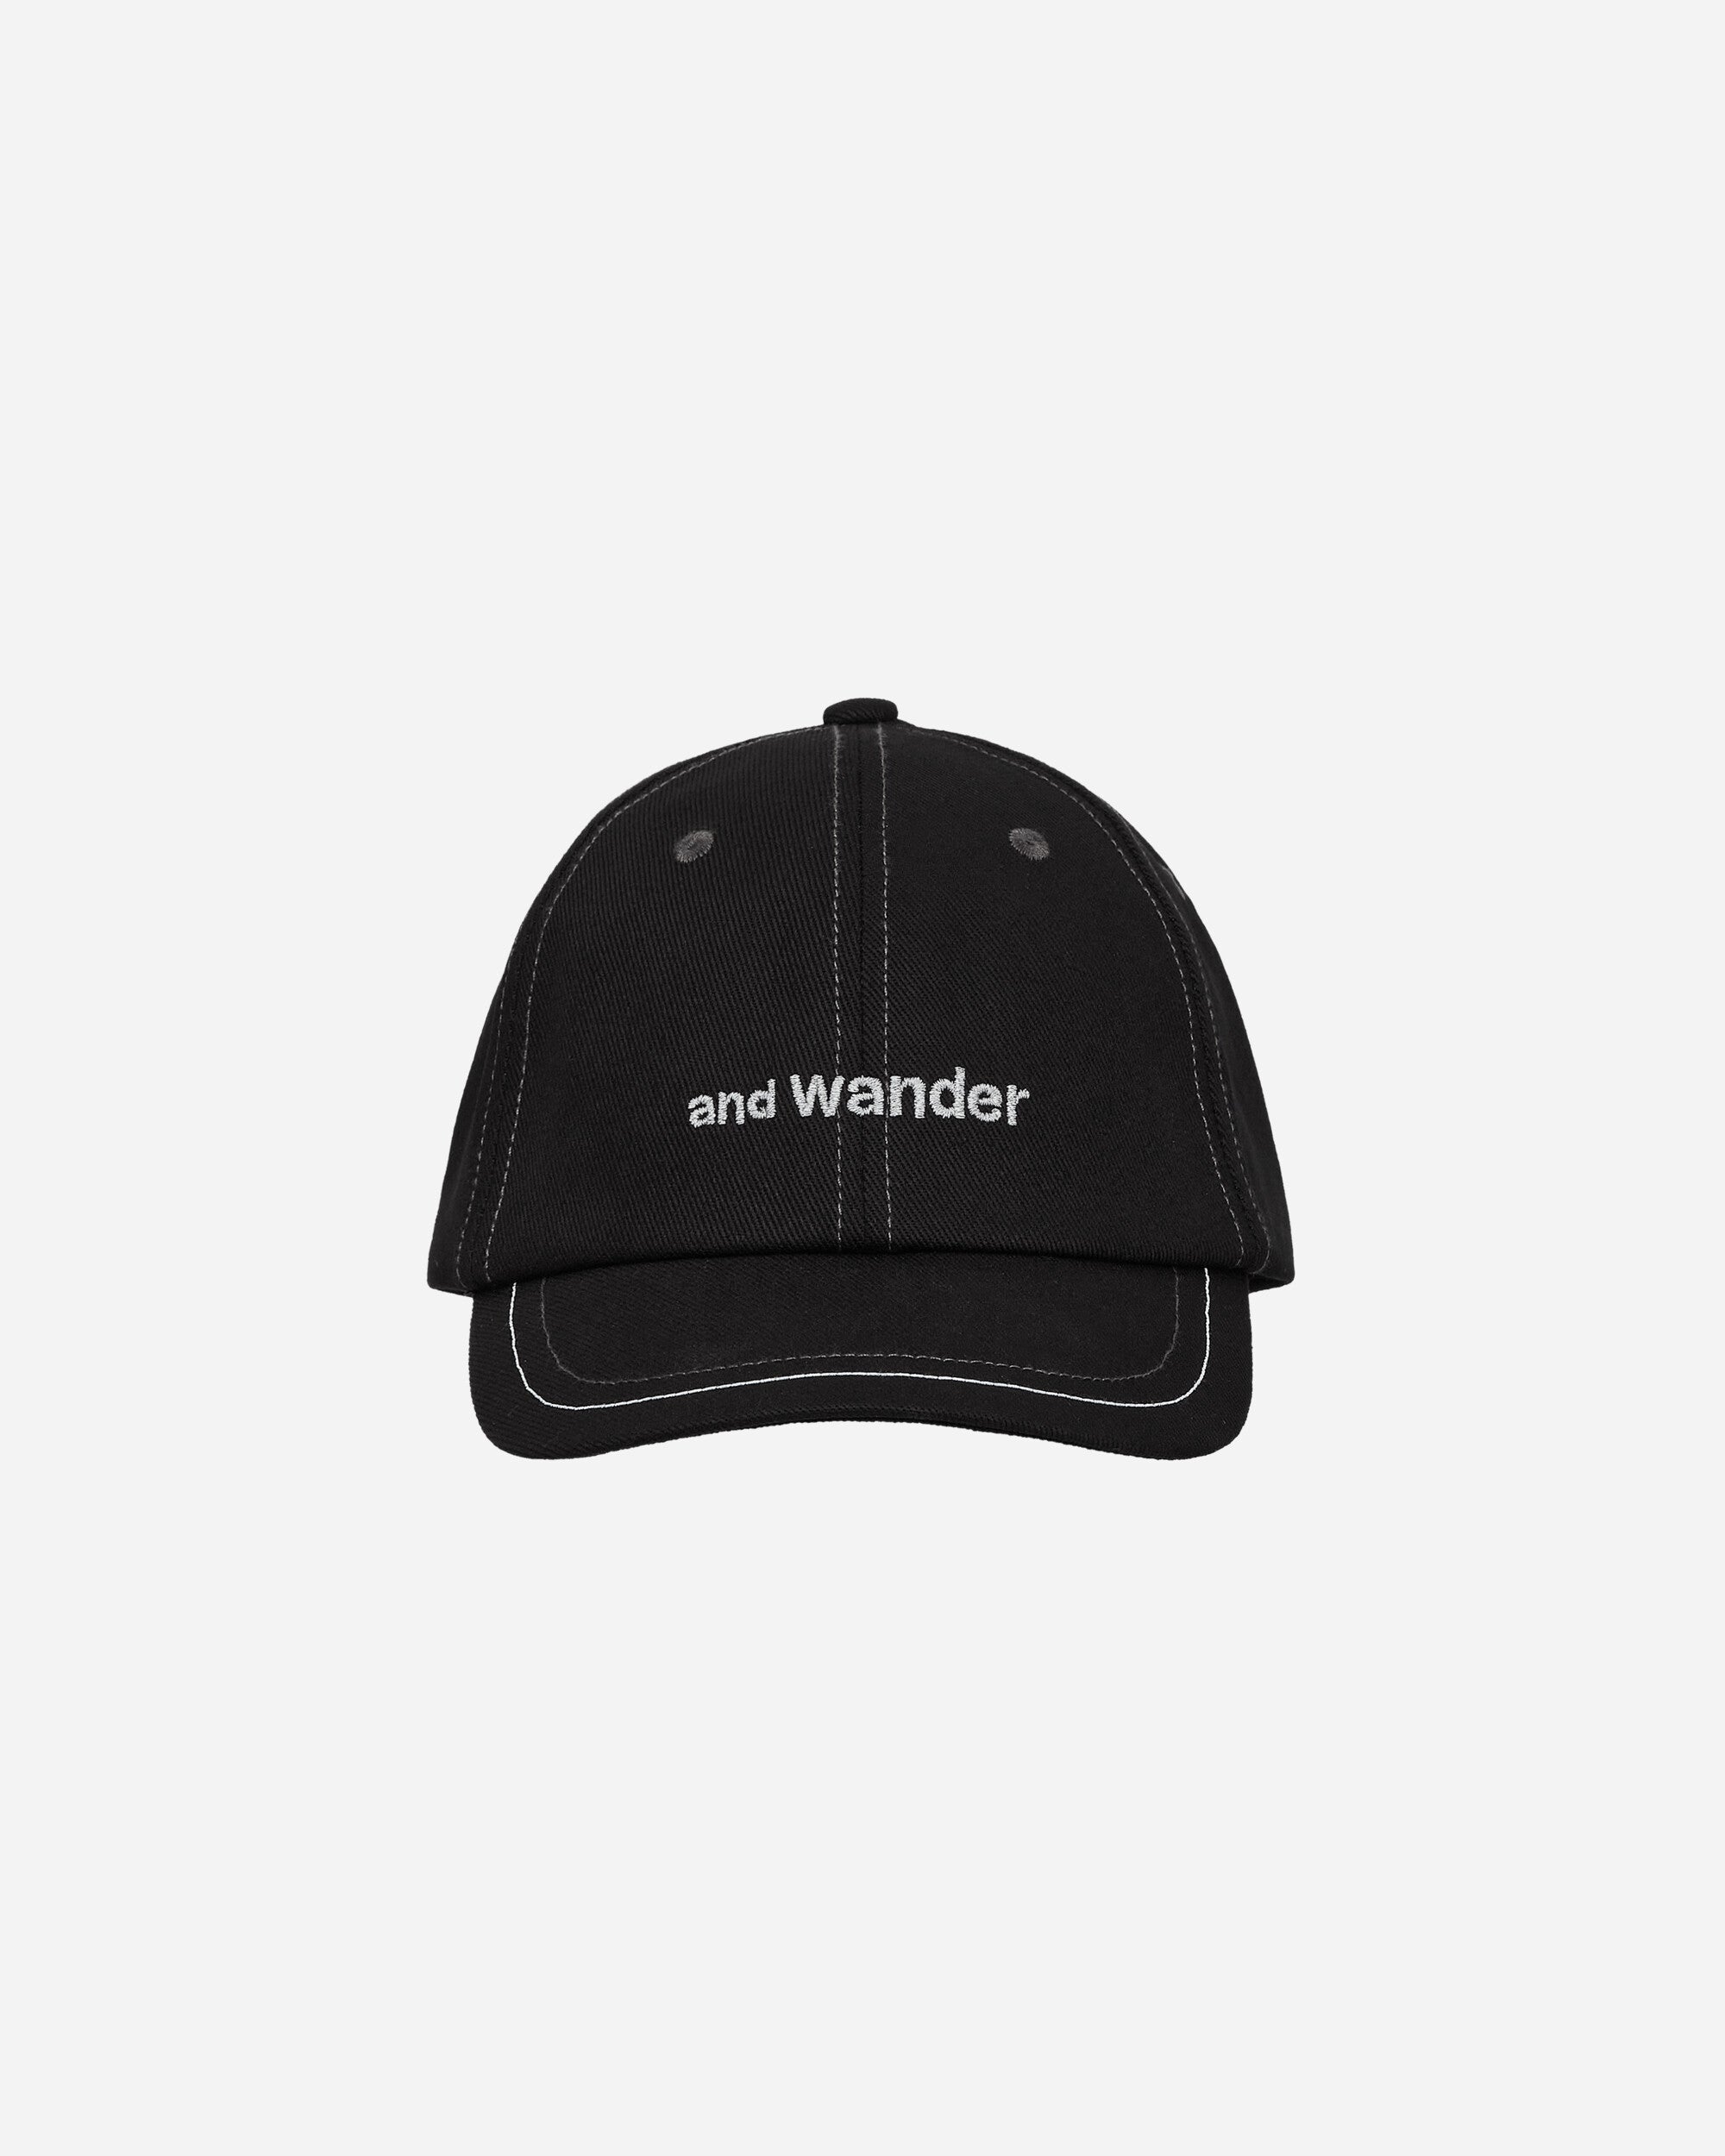 and wander Cotton Twill Cap Black Hats Caps 5744986235 010